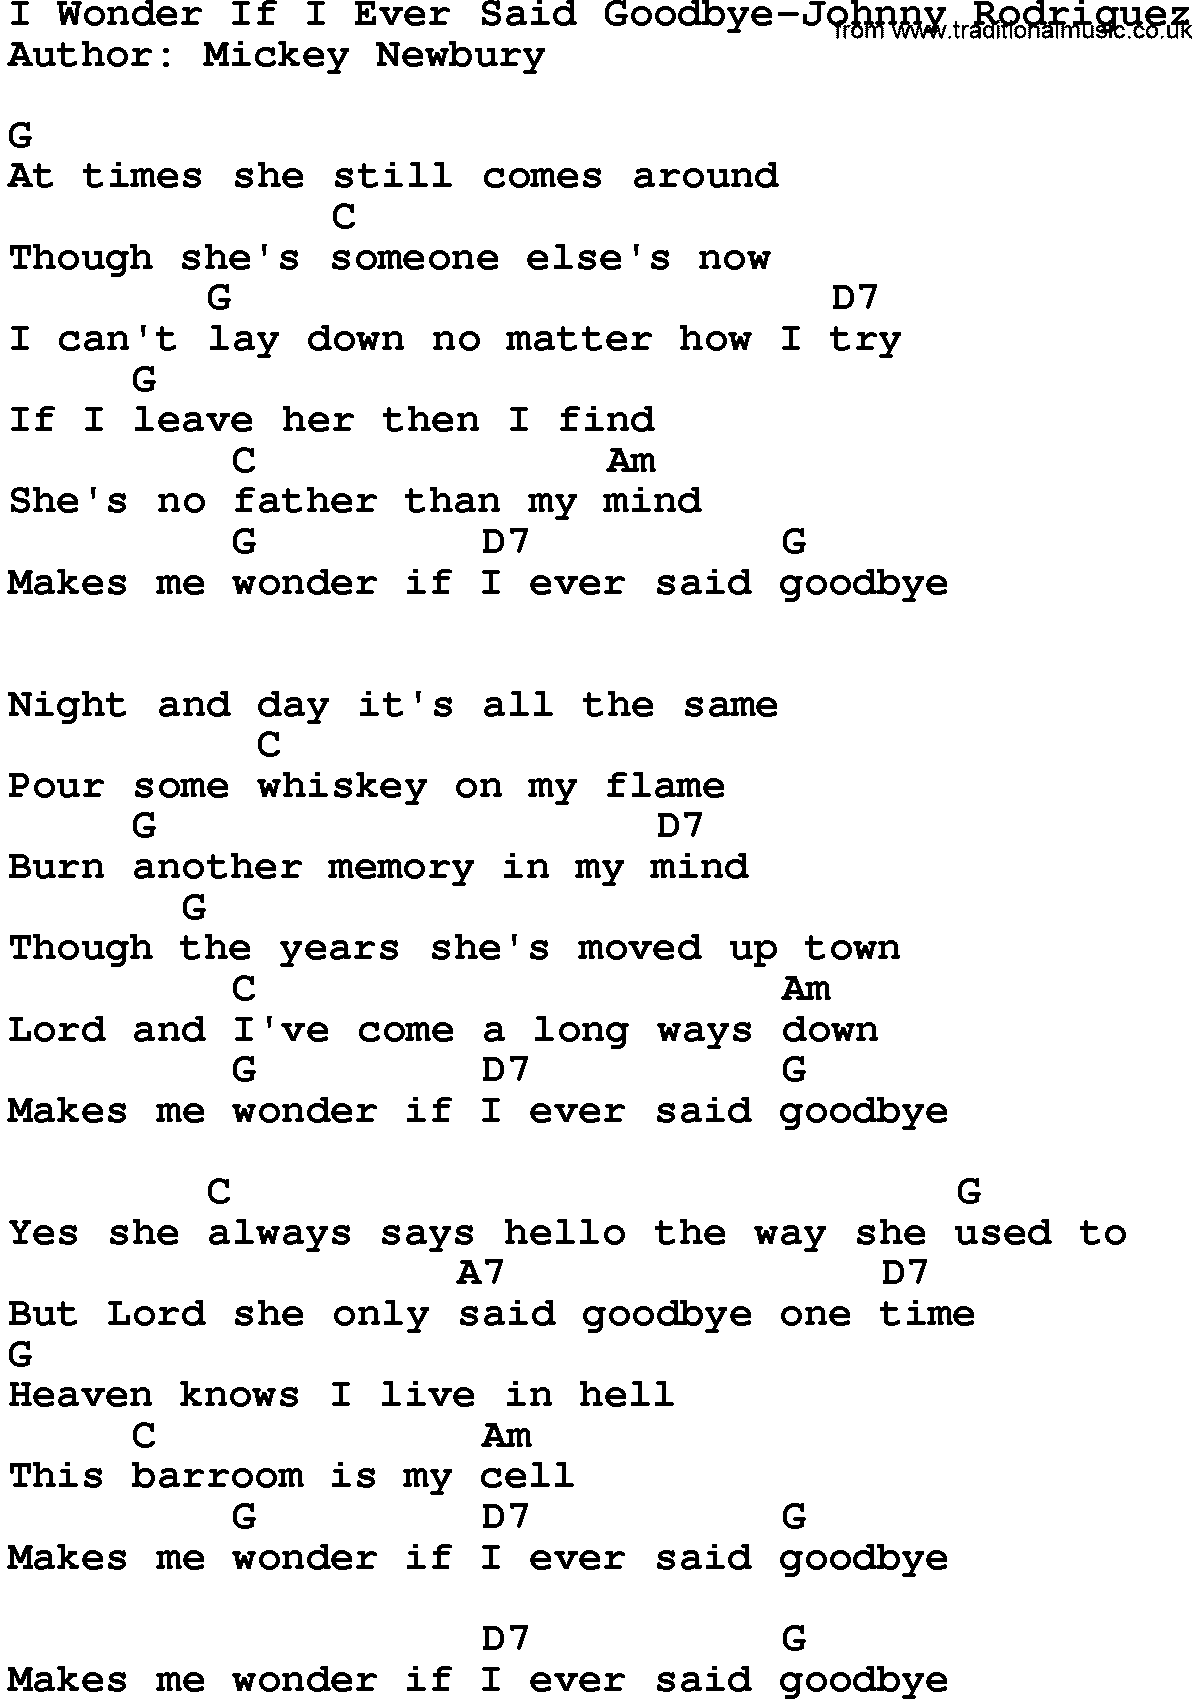 Country music song: I Wonder If I Ever Said Goodbye-Johnny Rodriguez lyrics and chords